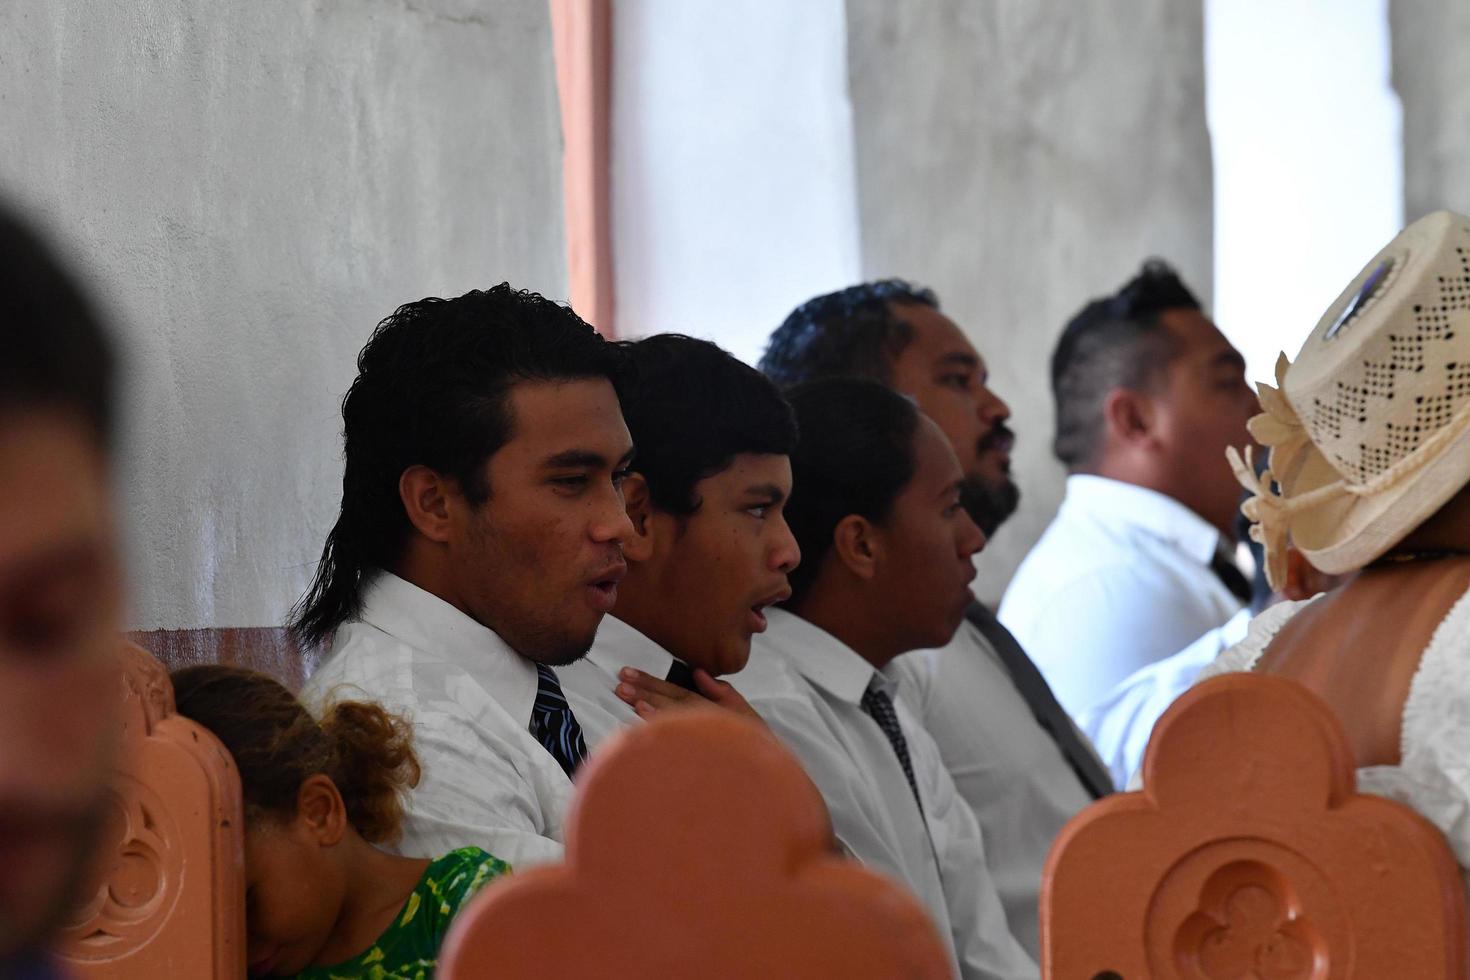 aitutaki, île cook - 27 août 2017 - population locale à la messe photo